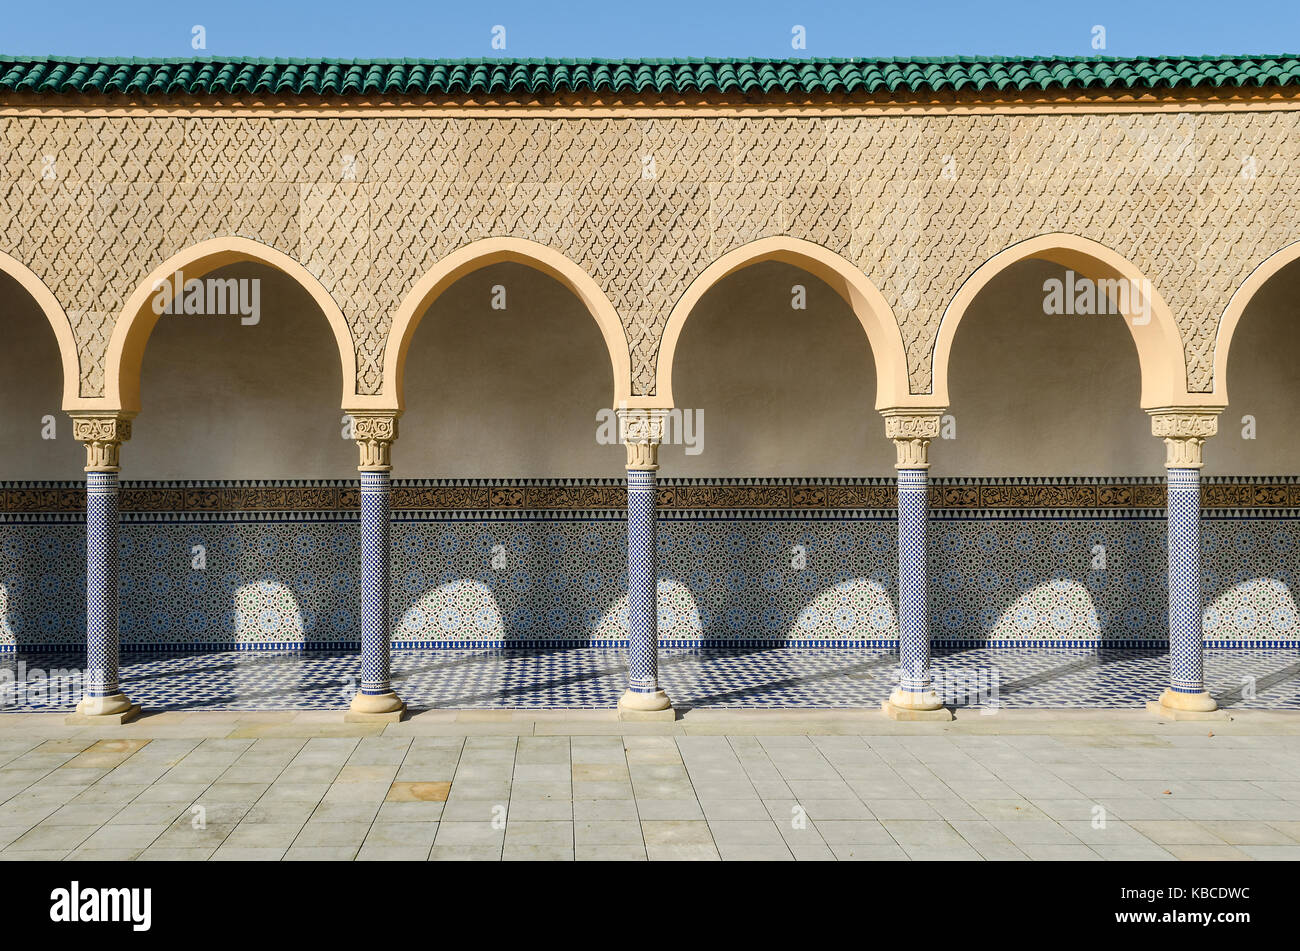 old arabic architecture with portico arcade colonnade Stock Photo